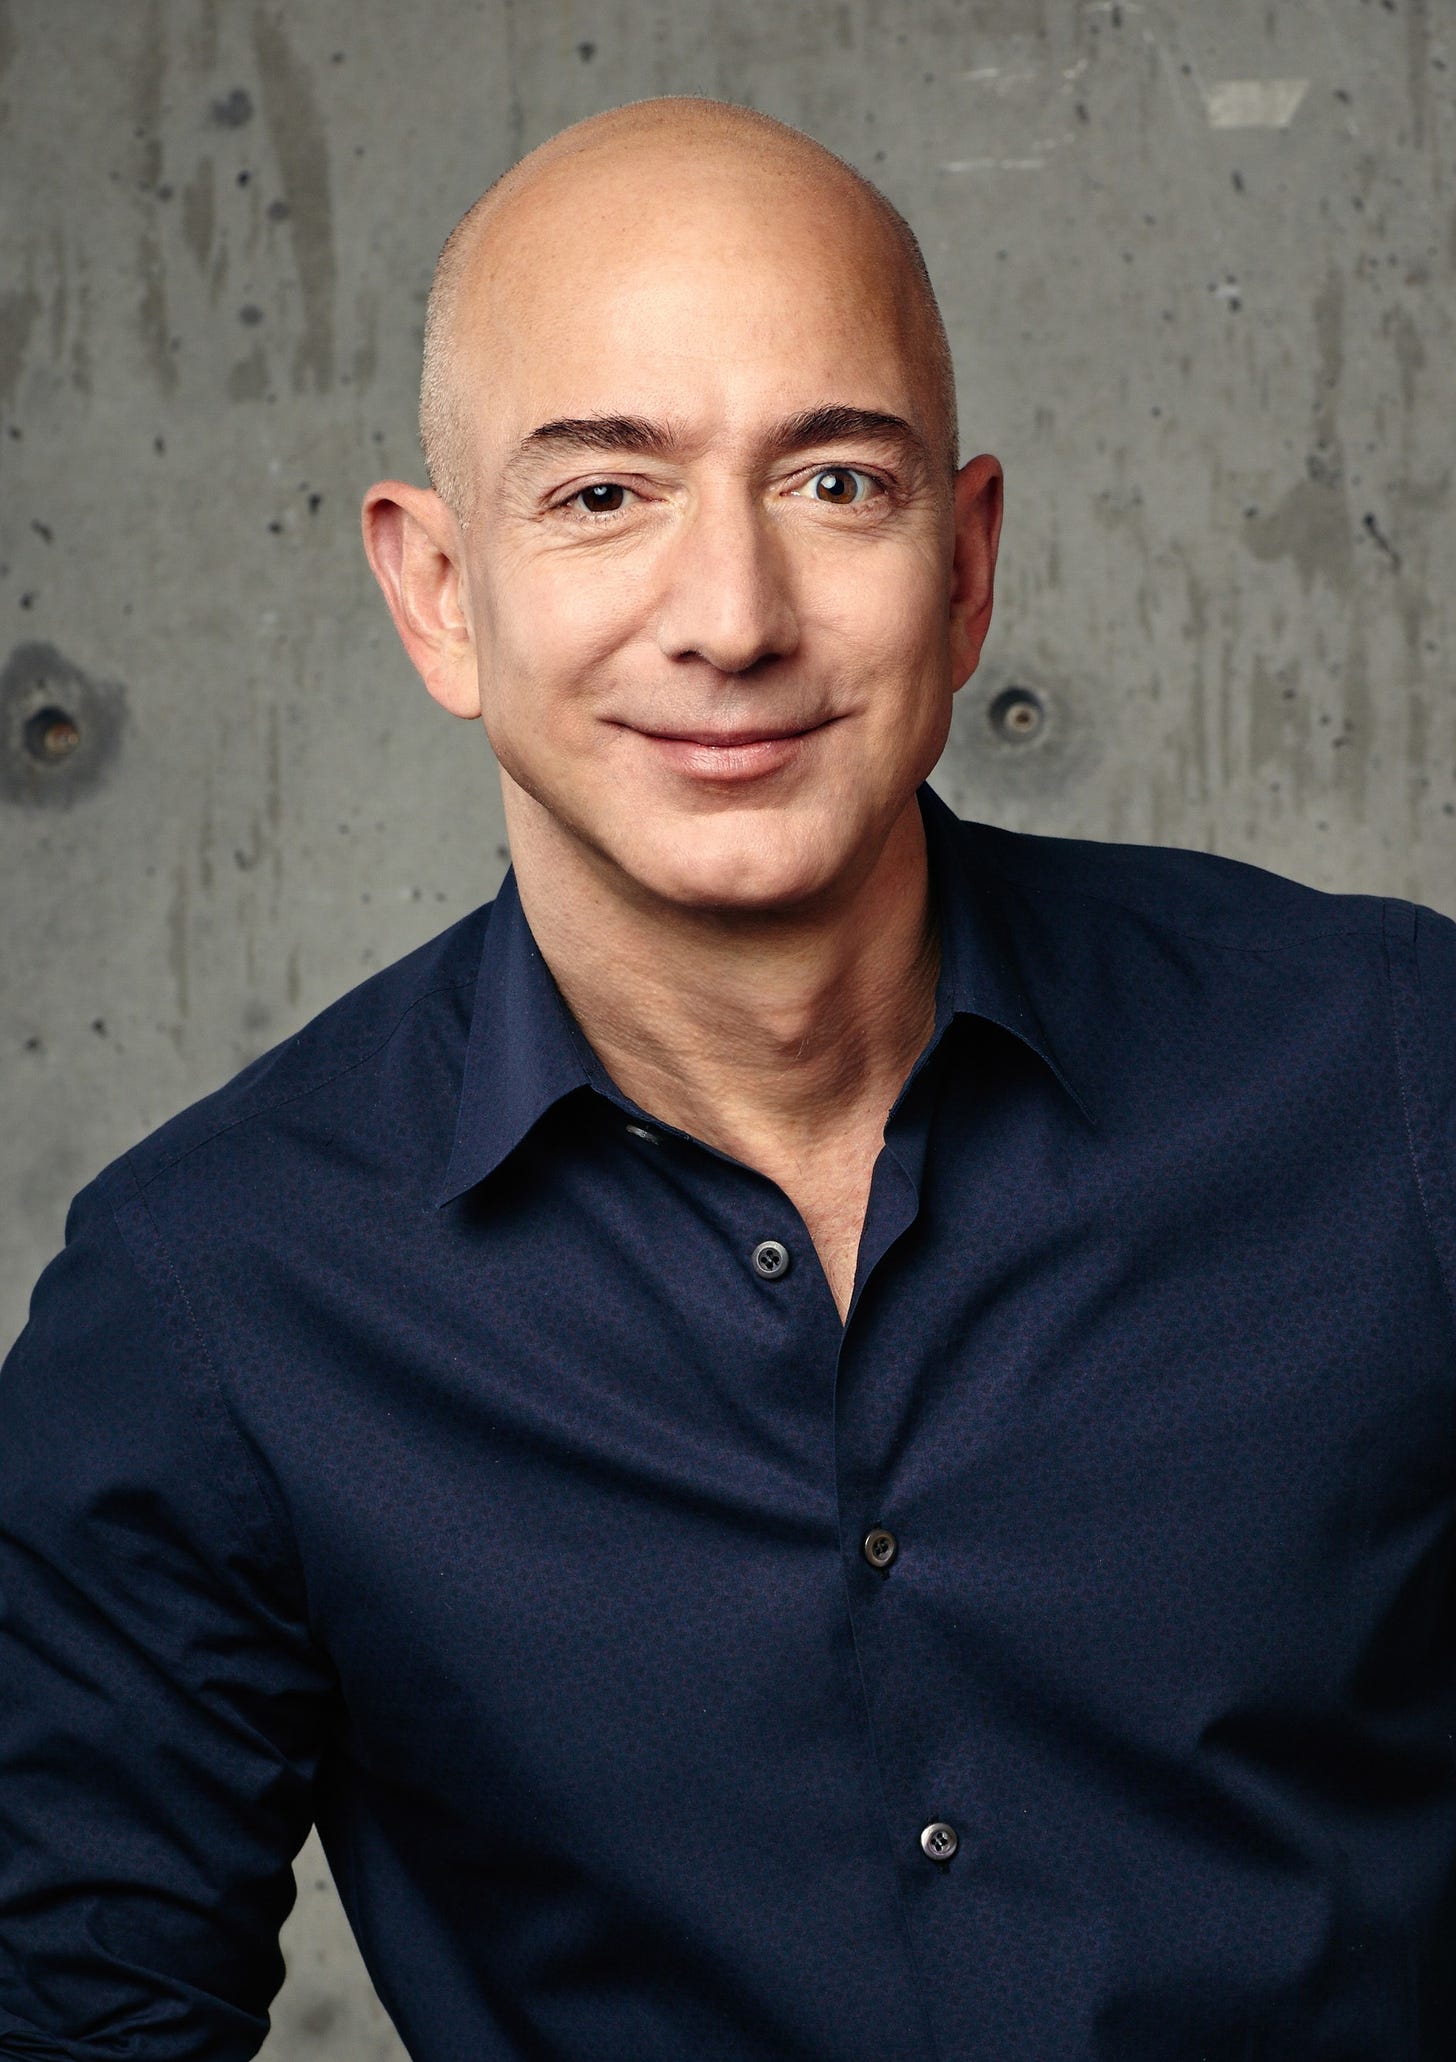 Jeff Bezos - IMDb